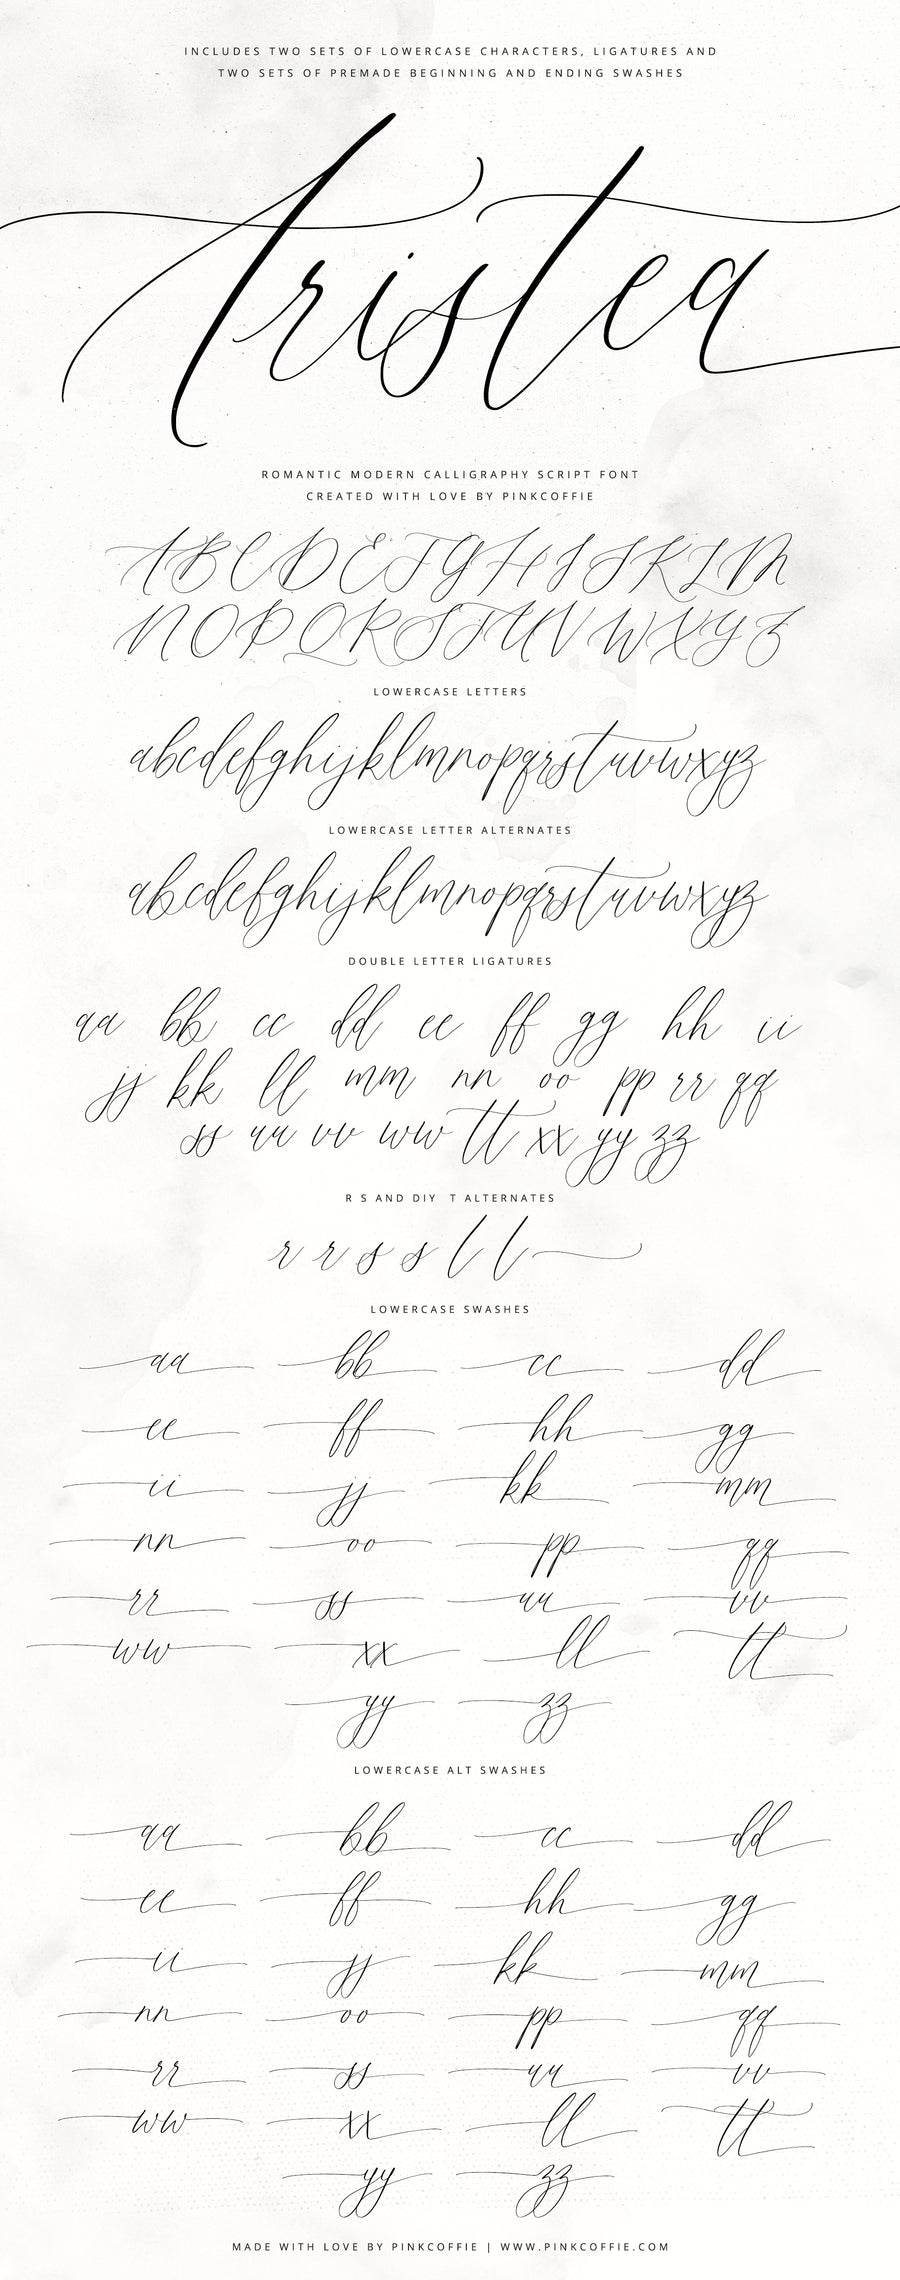 Aristea | Modern Calligraphy Script